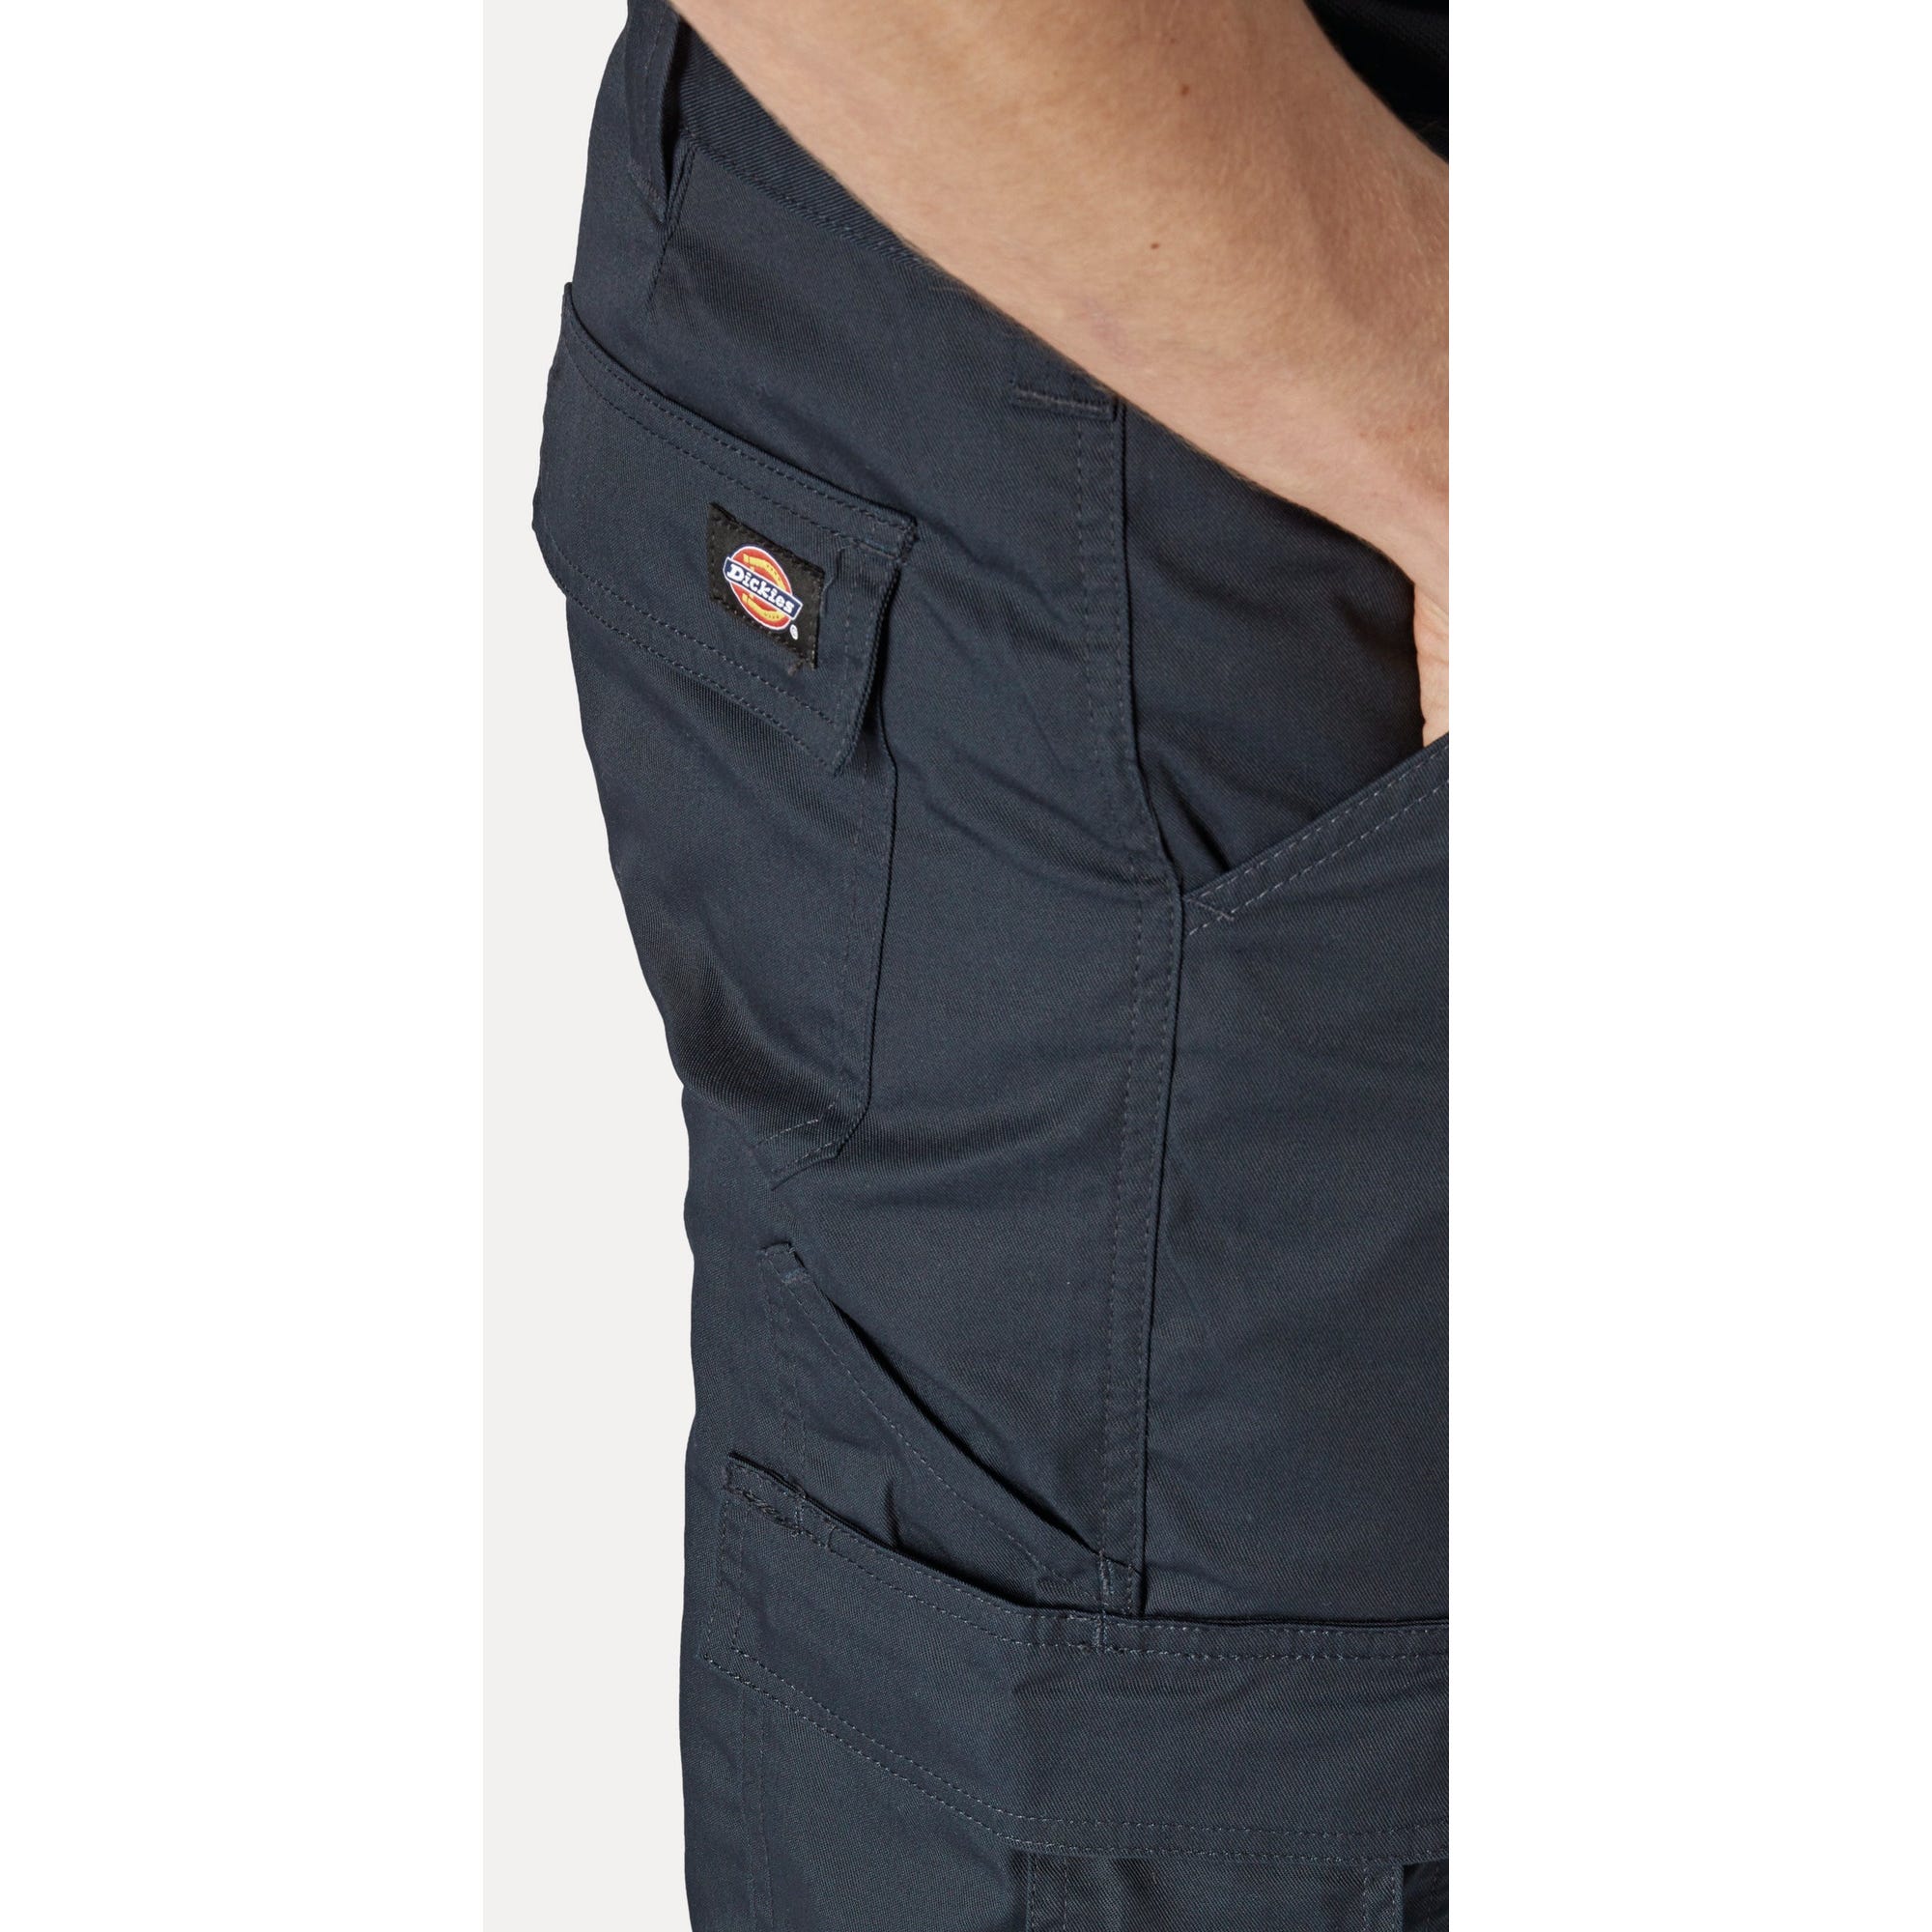 Pantalon Everyday Bleu marine - Dickies - Taille 46 8